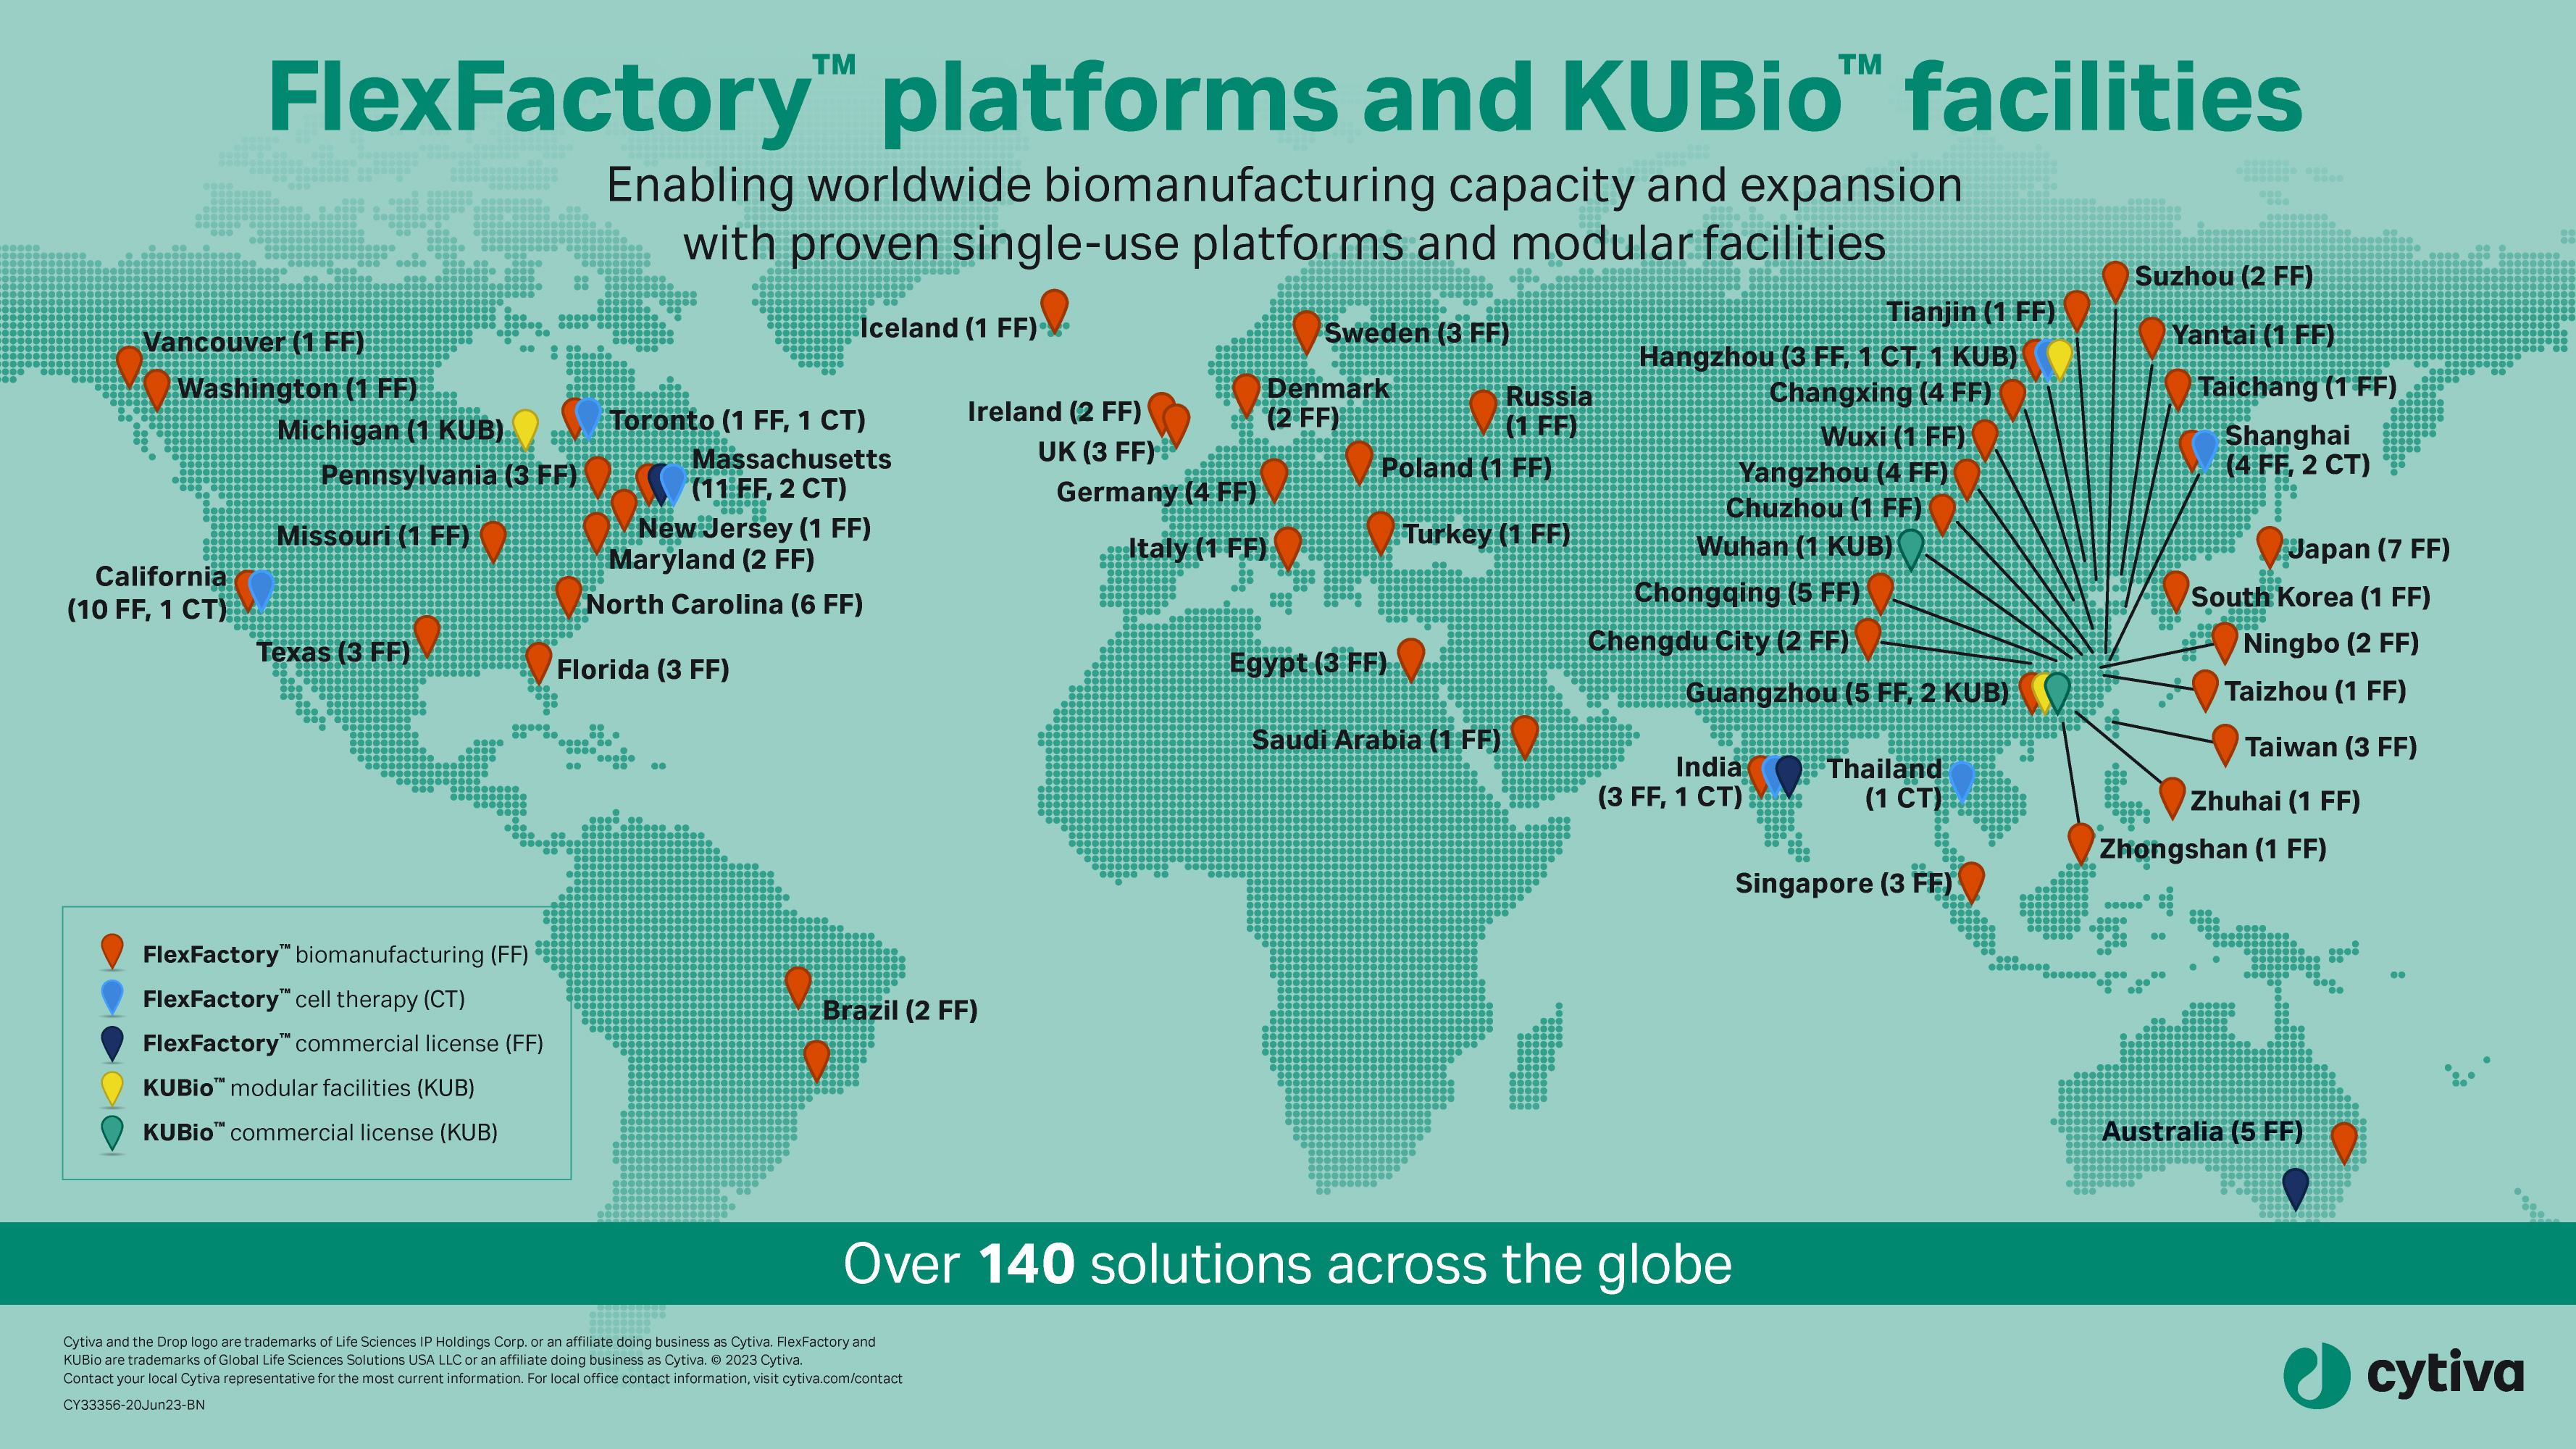 FlexFactory™ biomanufacturing platform, KUBio™ modular facility